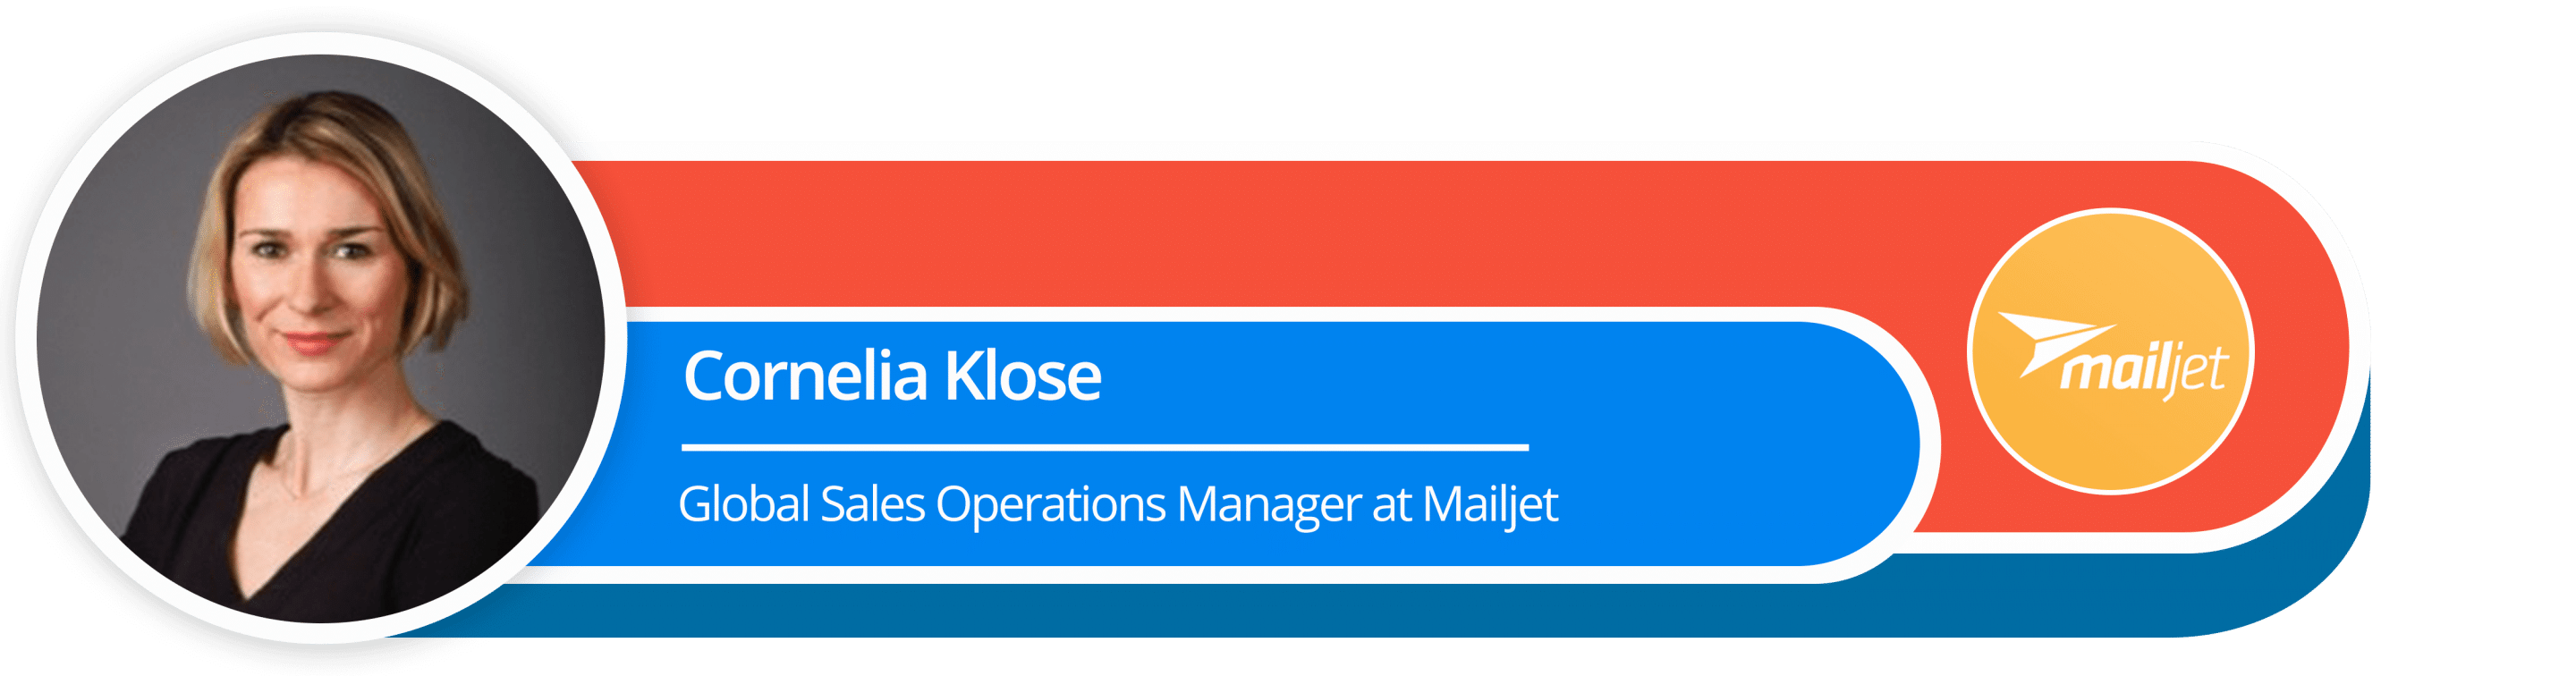 Cornelia Klose
Global Sales Operations Manager at Mailjet